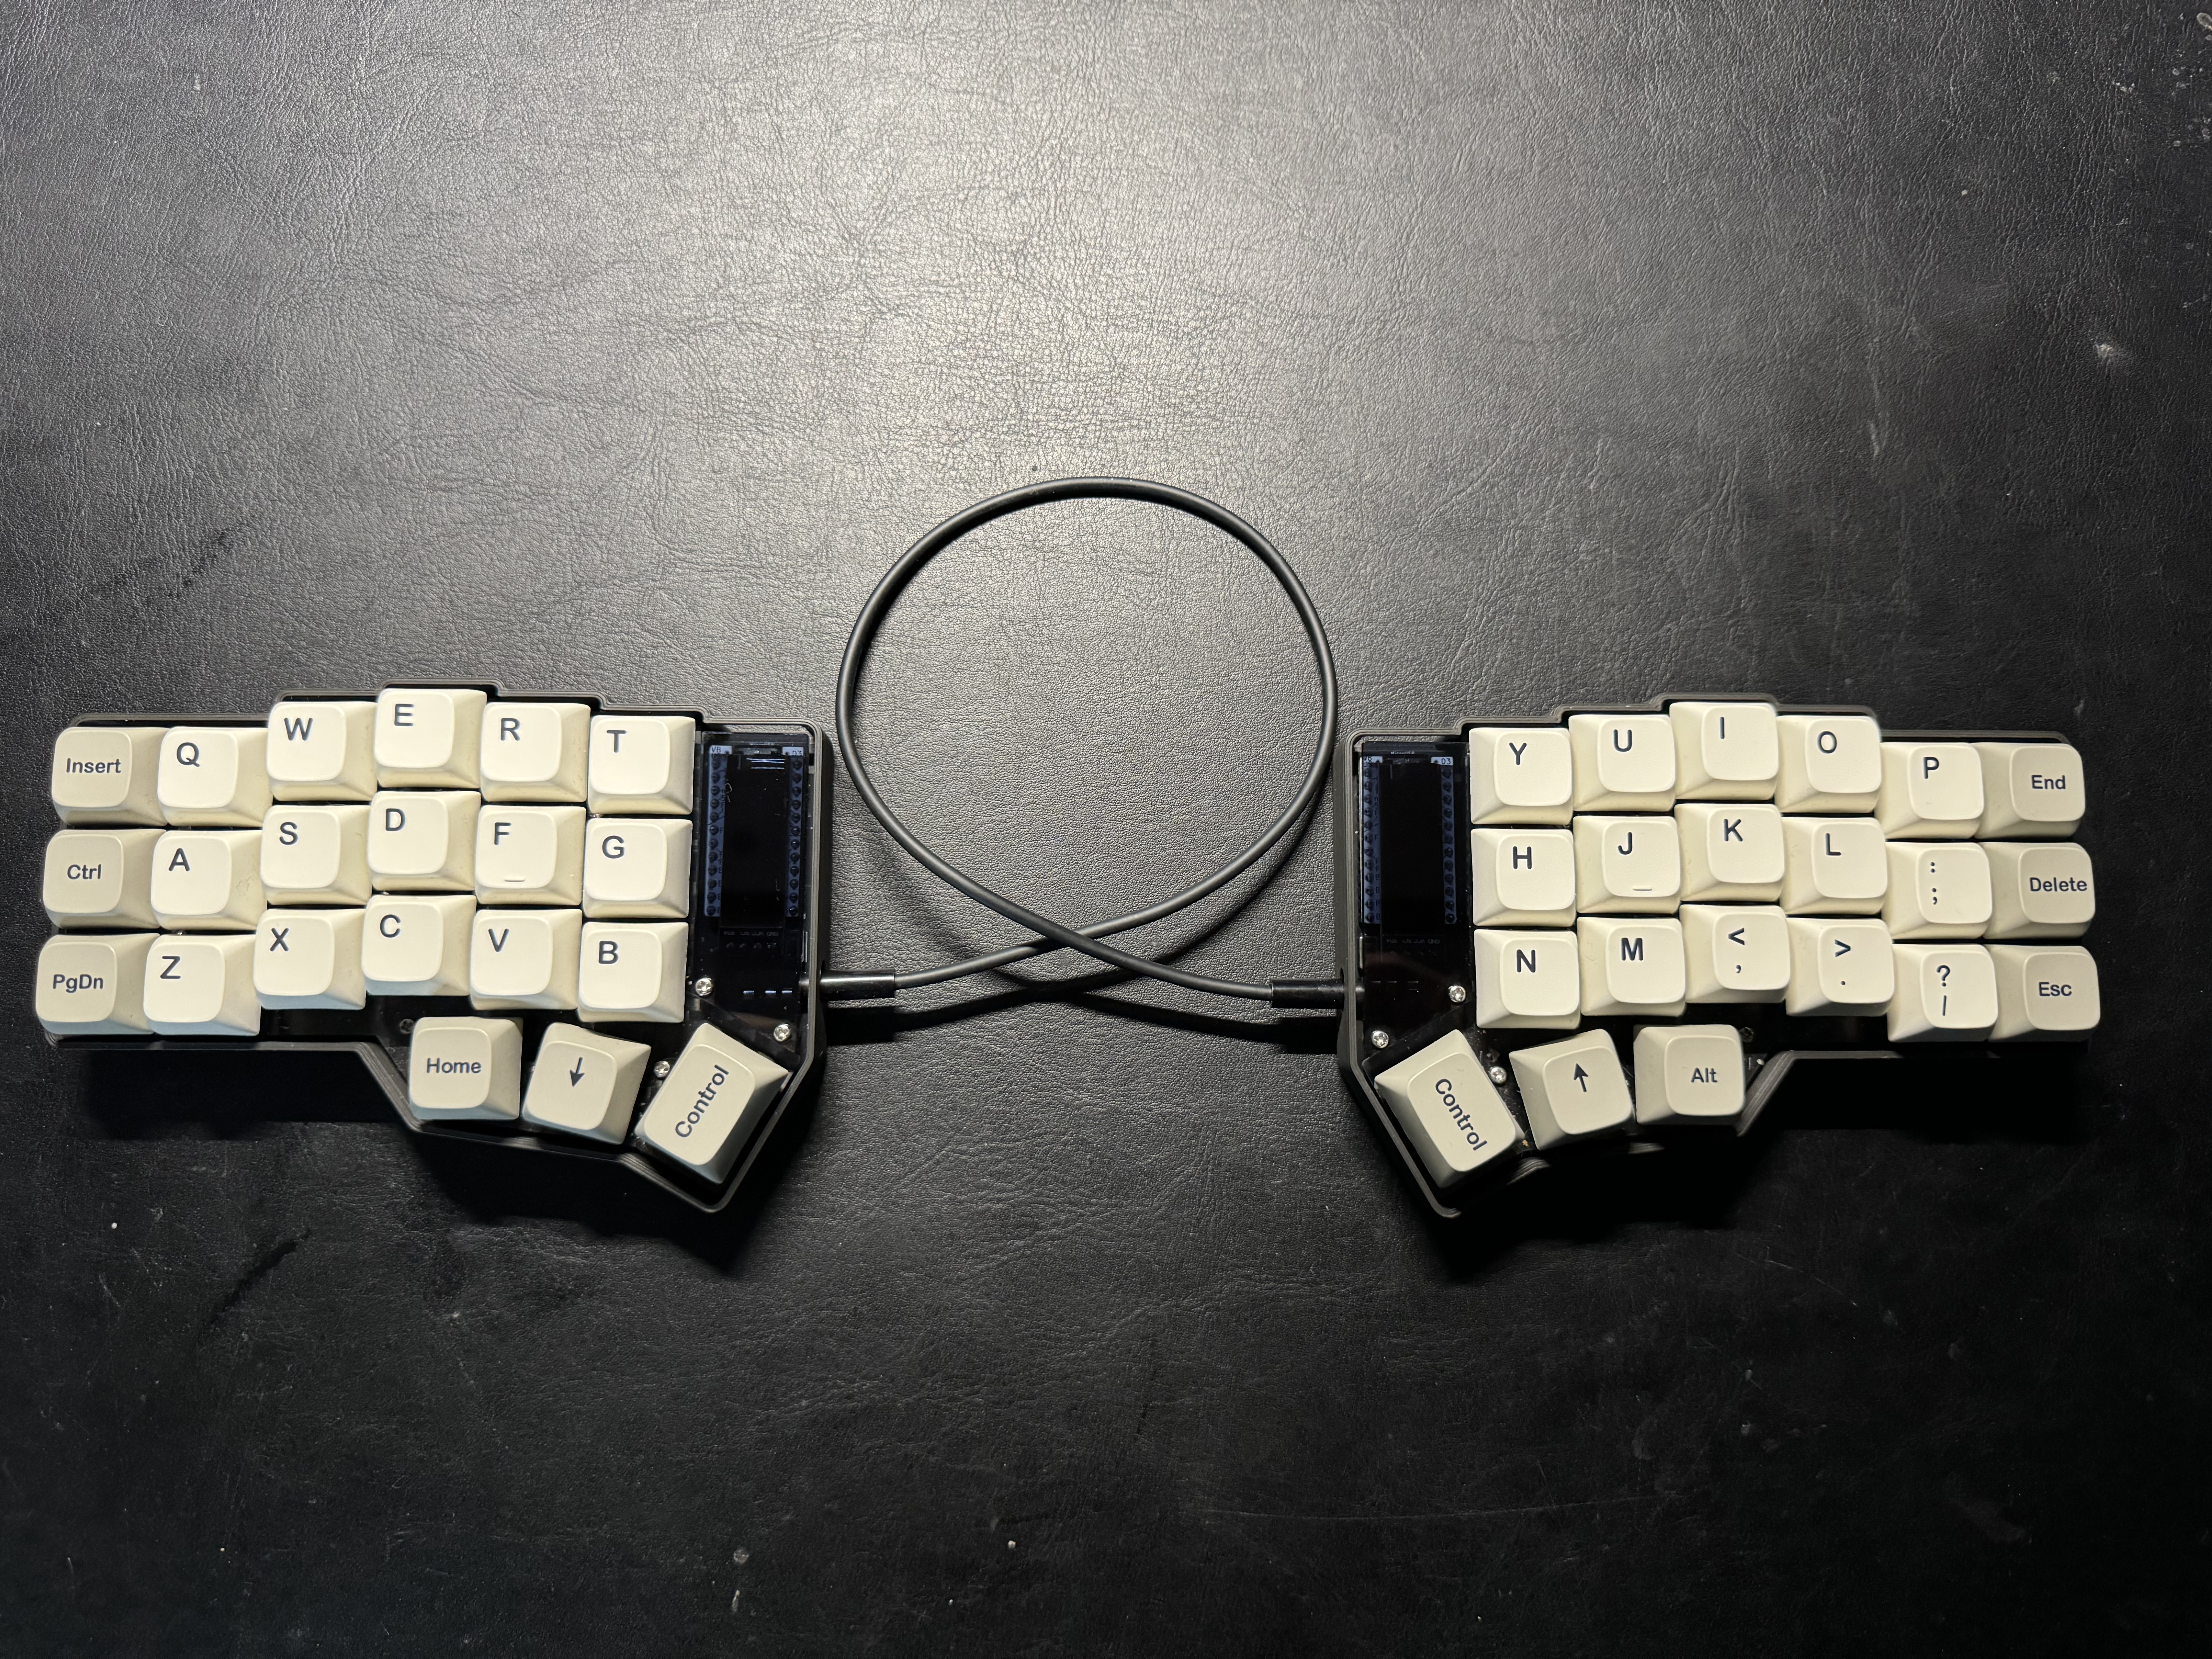 Keyboard image